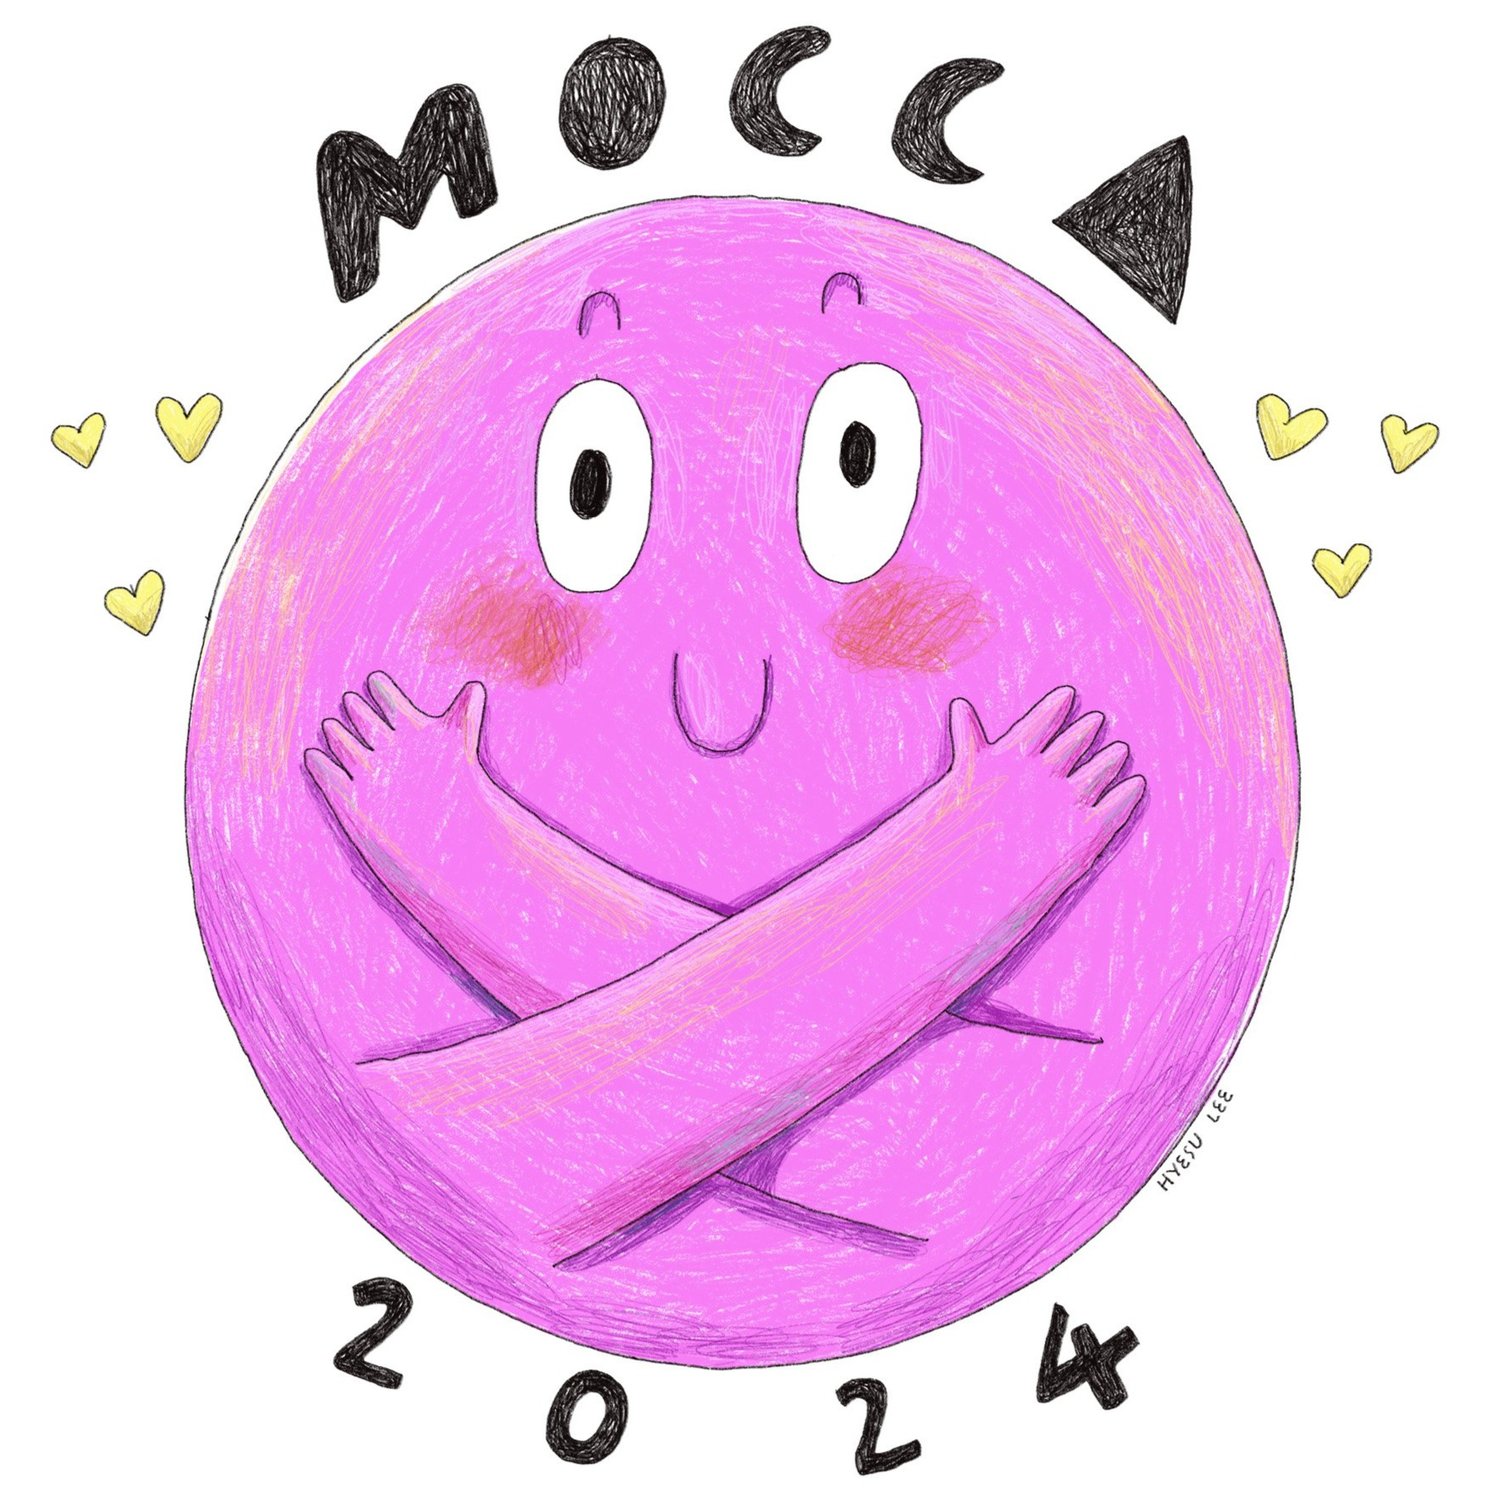 MoCCA Arts Fest